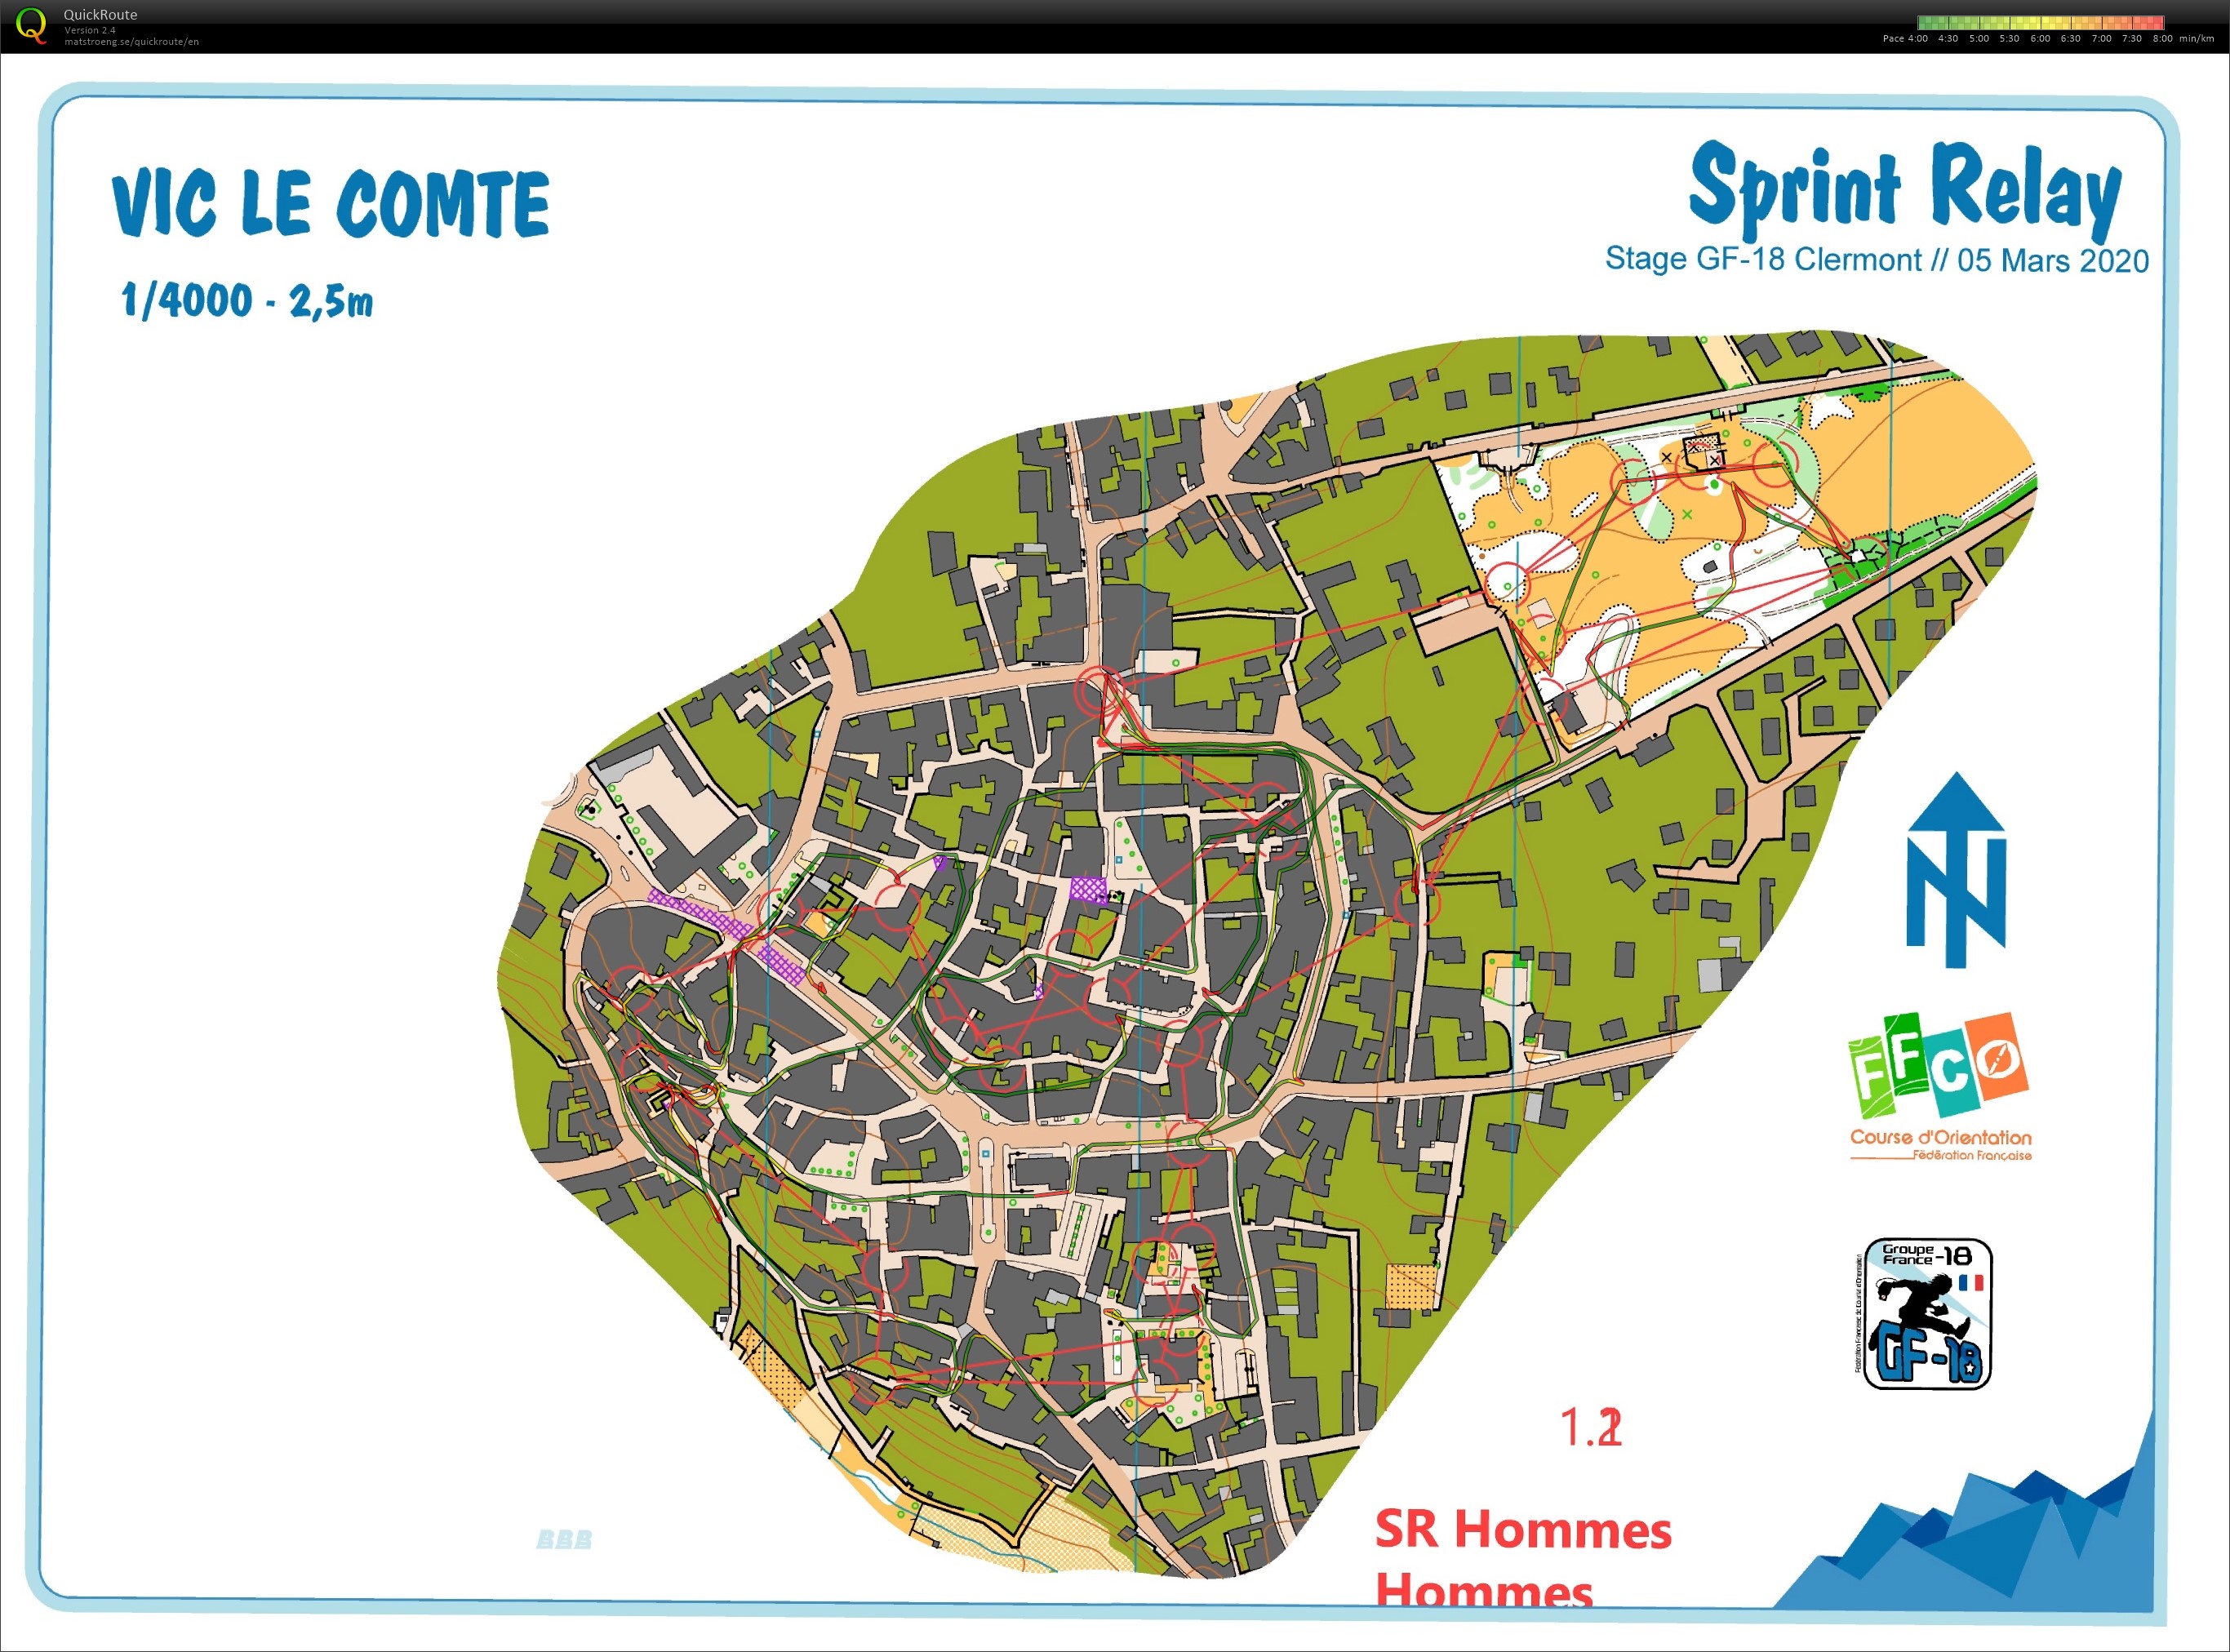 Stage gf-18 Clermont (8) Sprint Relais (05/03/2020)